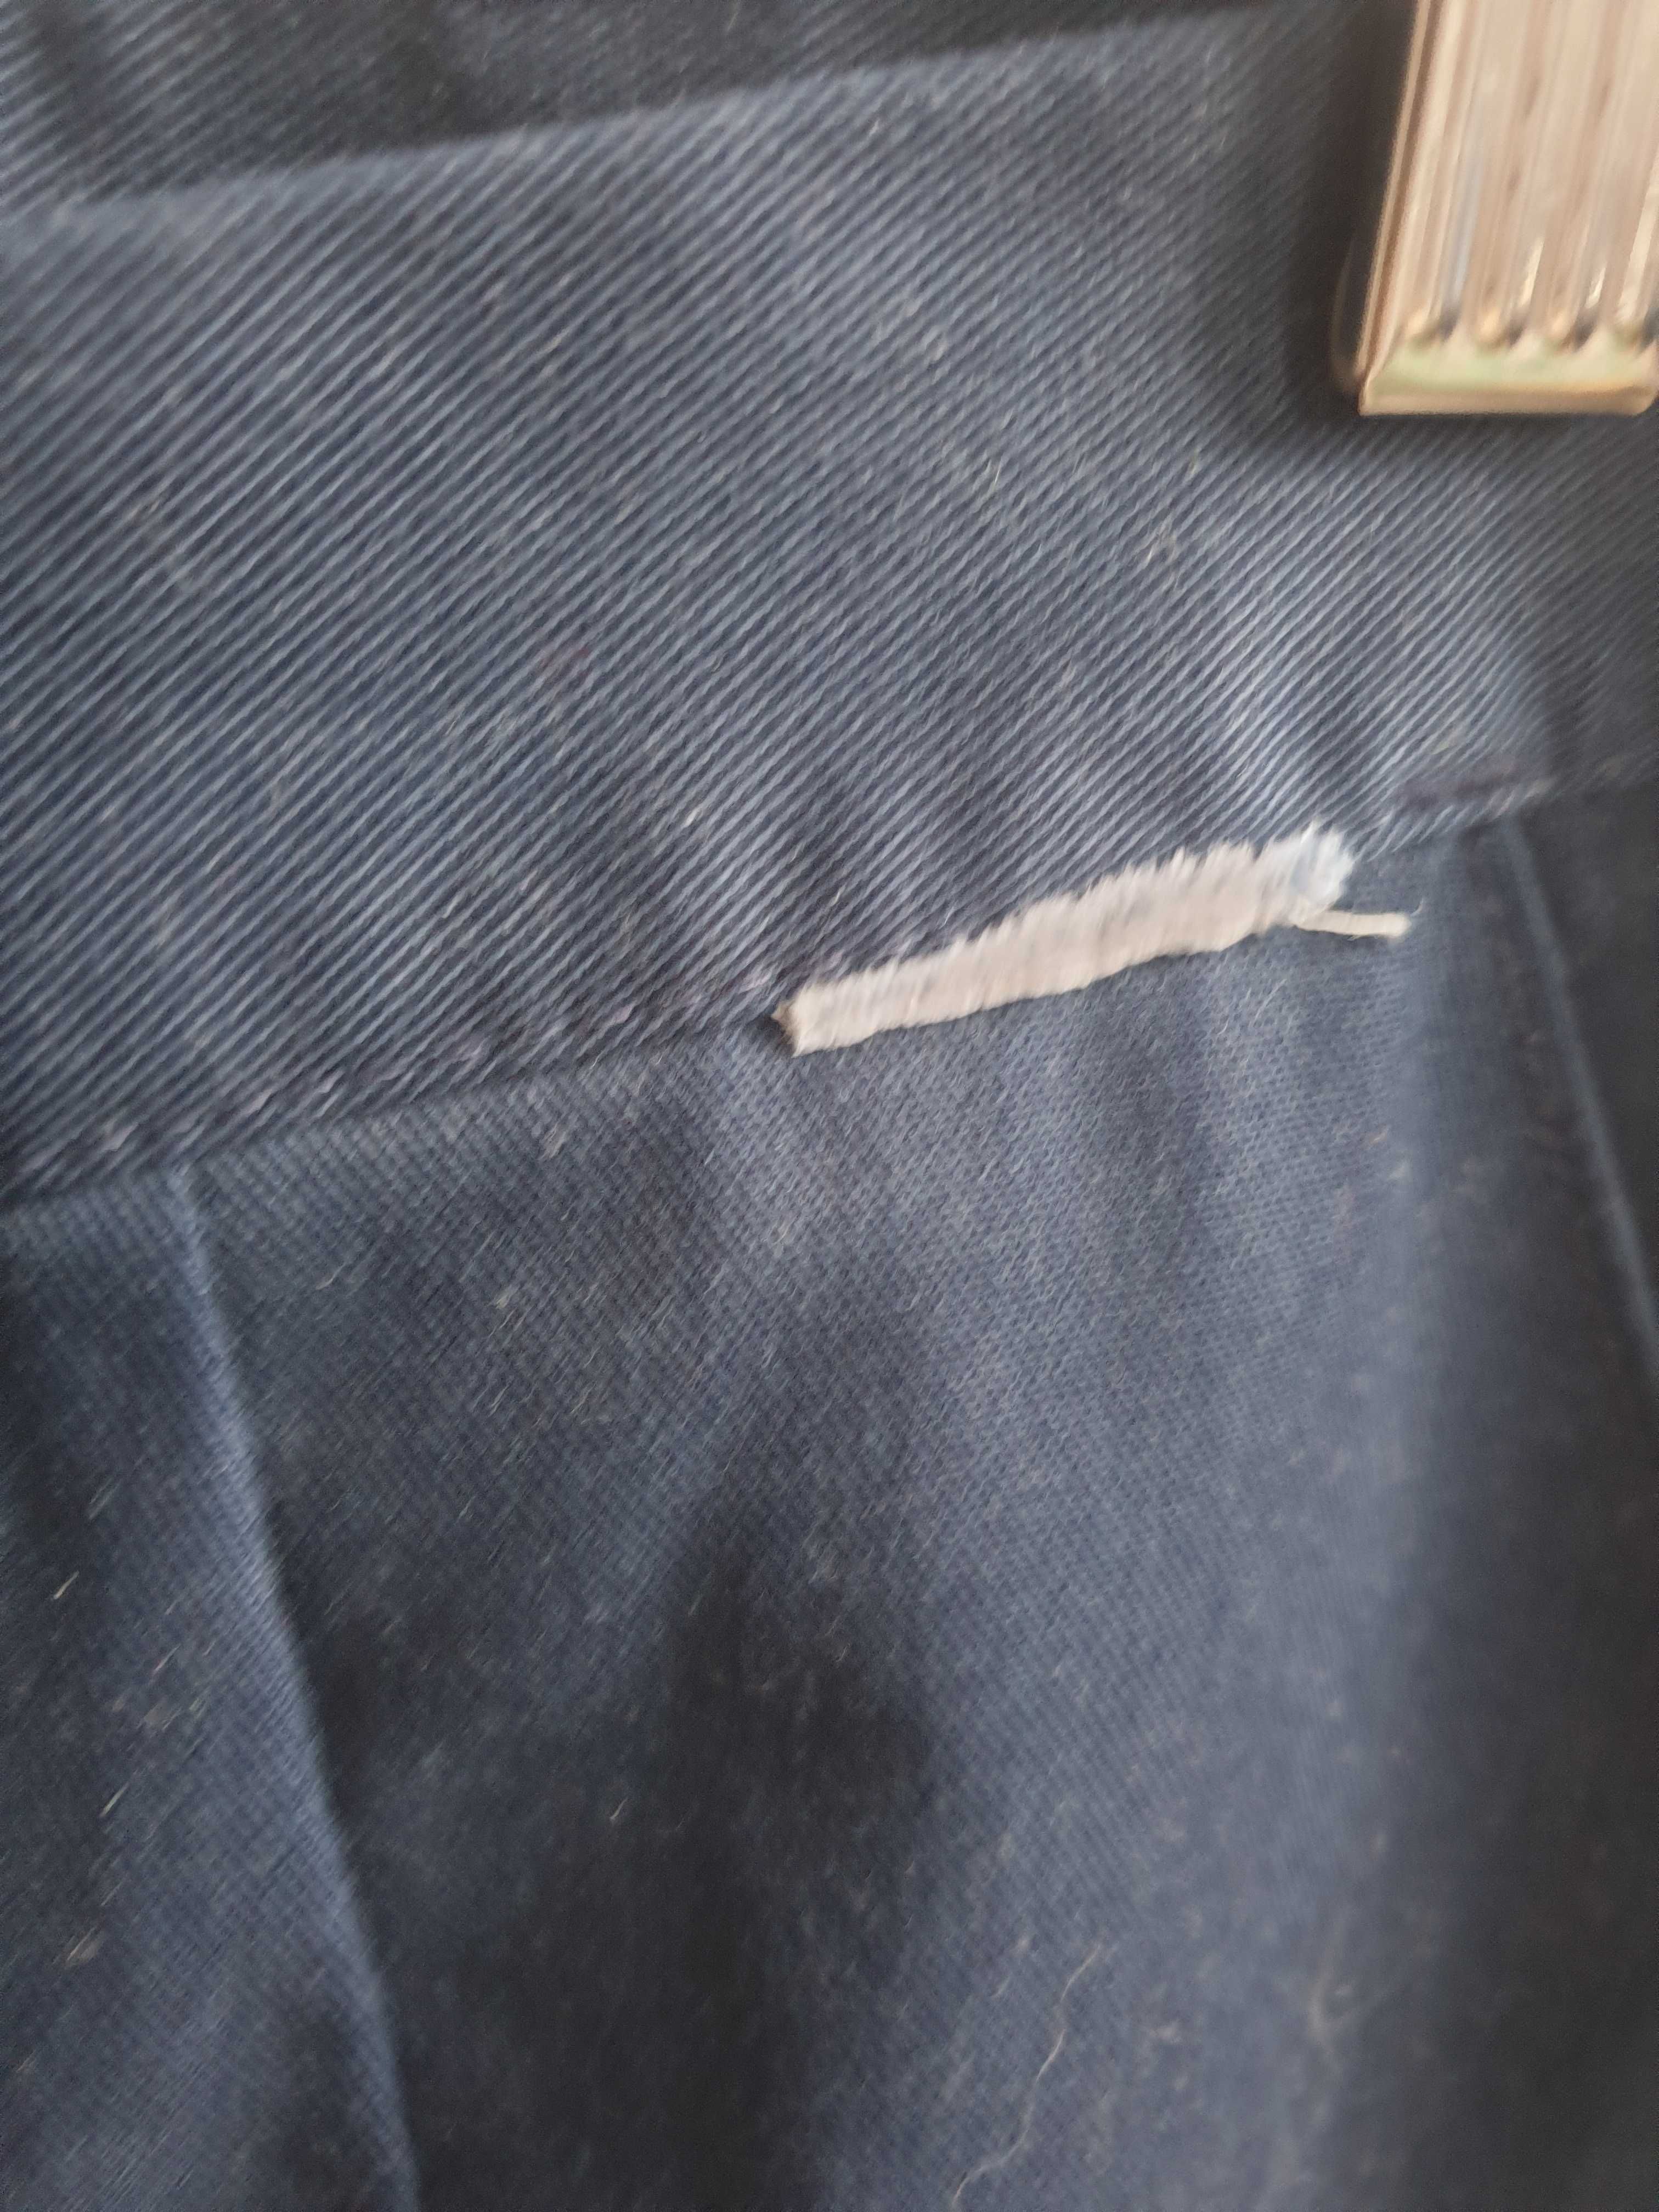 Granatowe spodnie cargo bojówki vintage 40